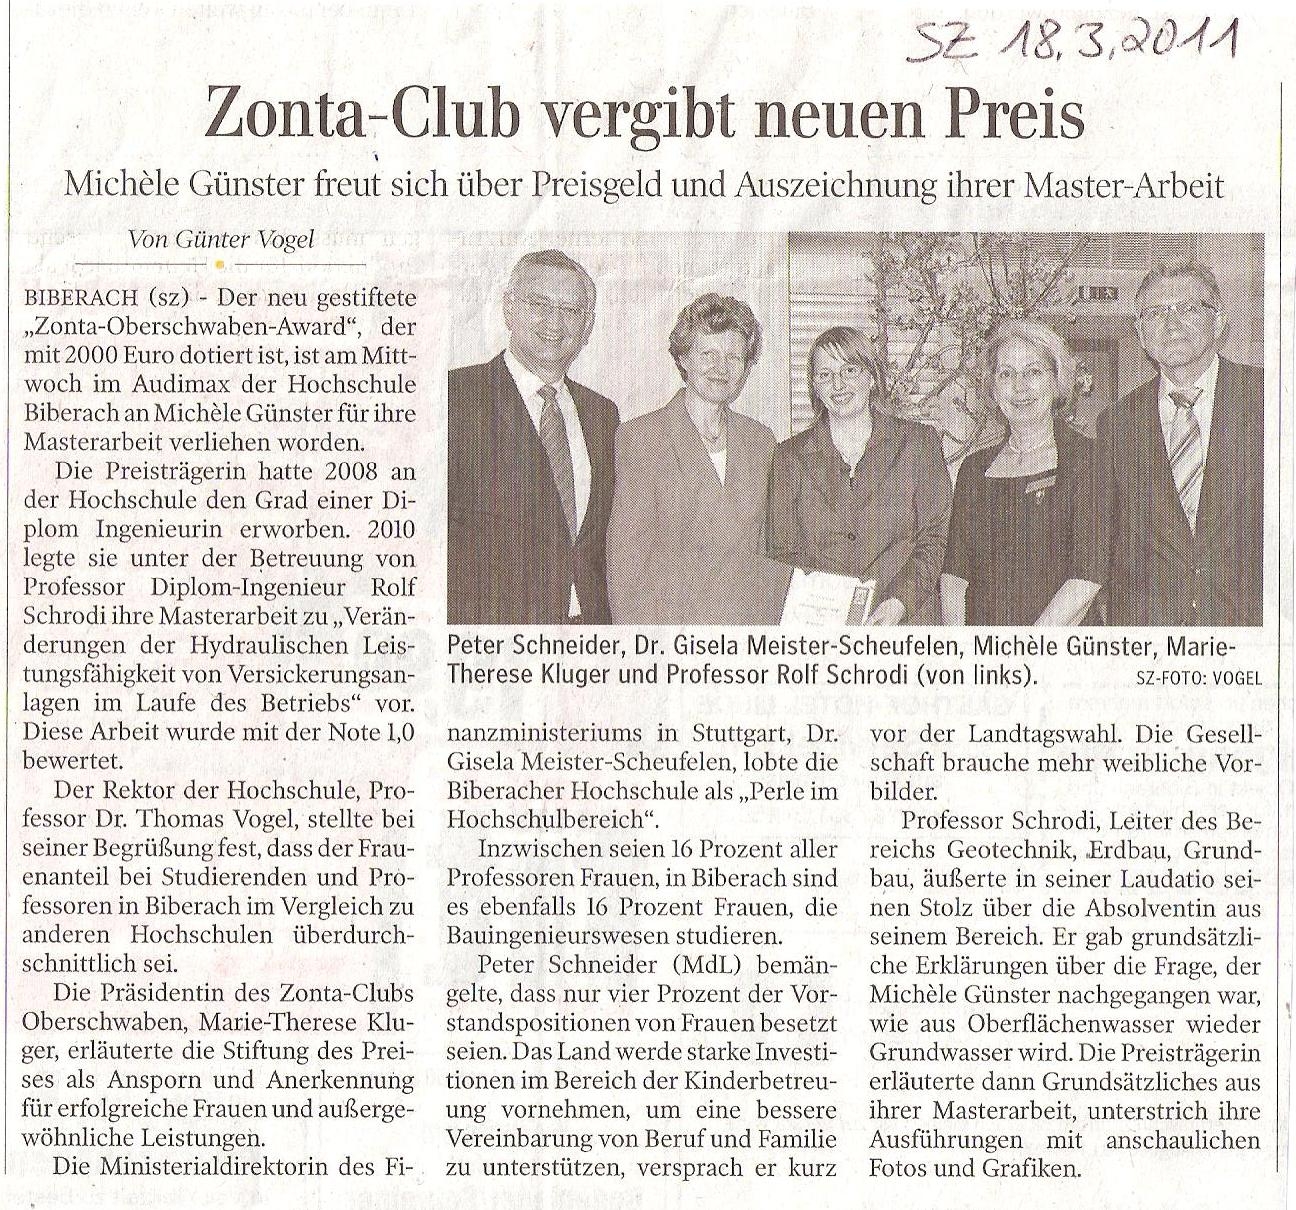 Zonta Wissenschafts Award